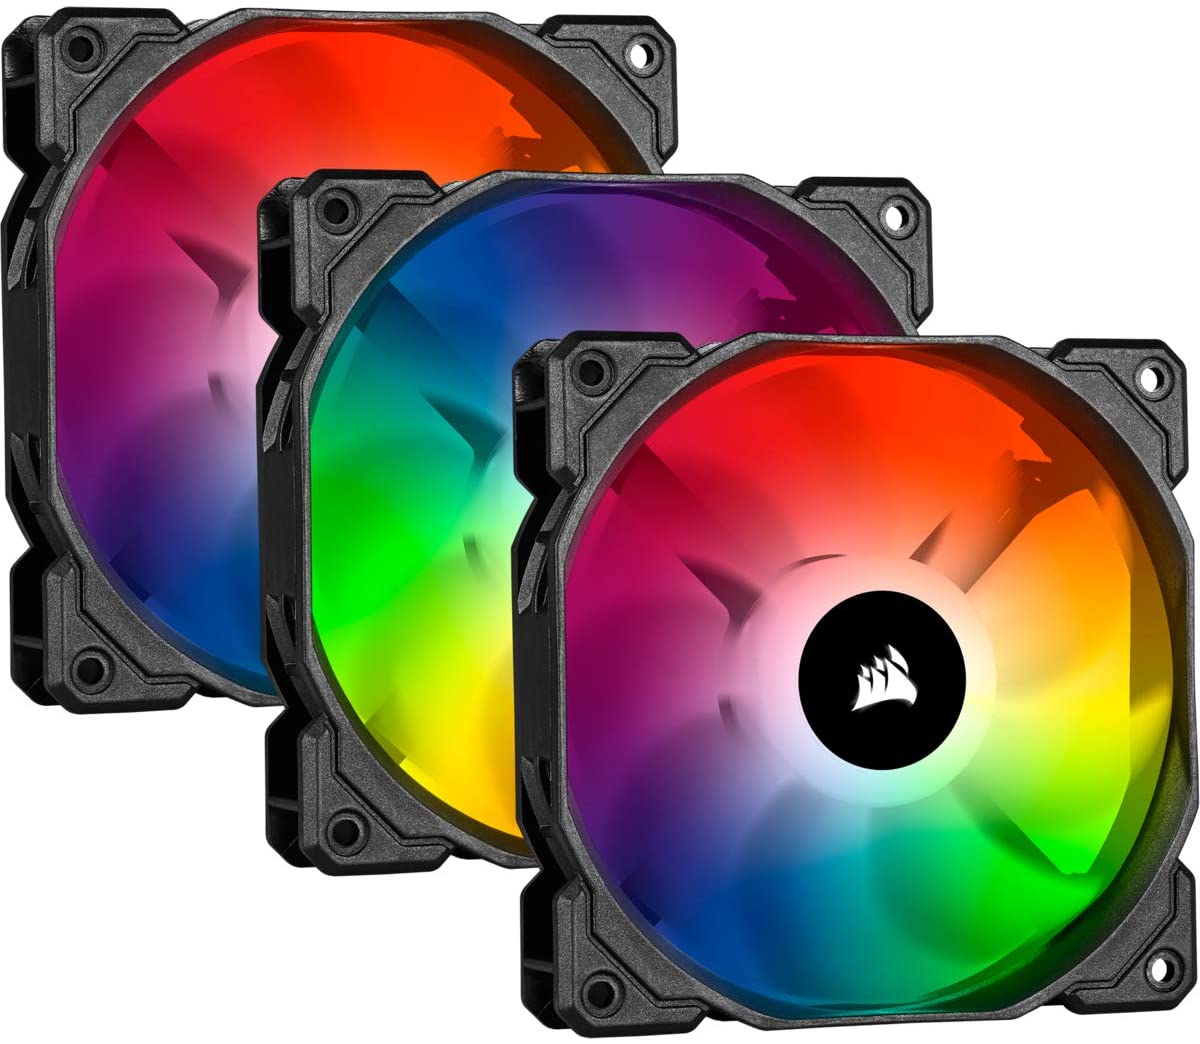 Corsair iCUE SP120 RGB Pro Triple Fan Kit with Lighting Node Core